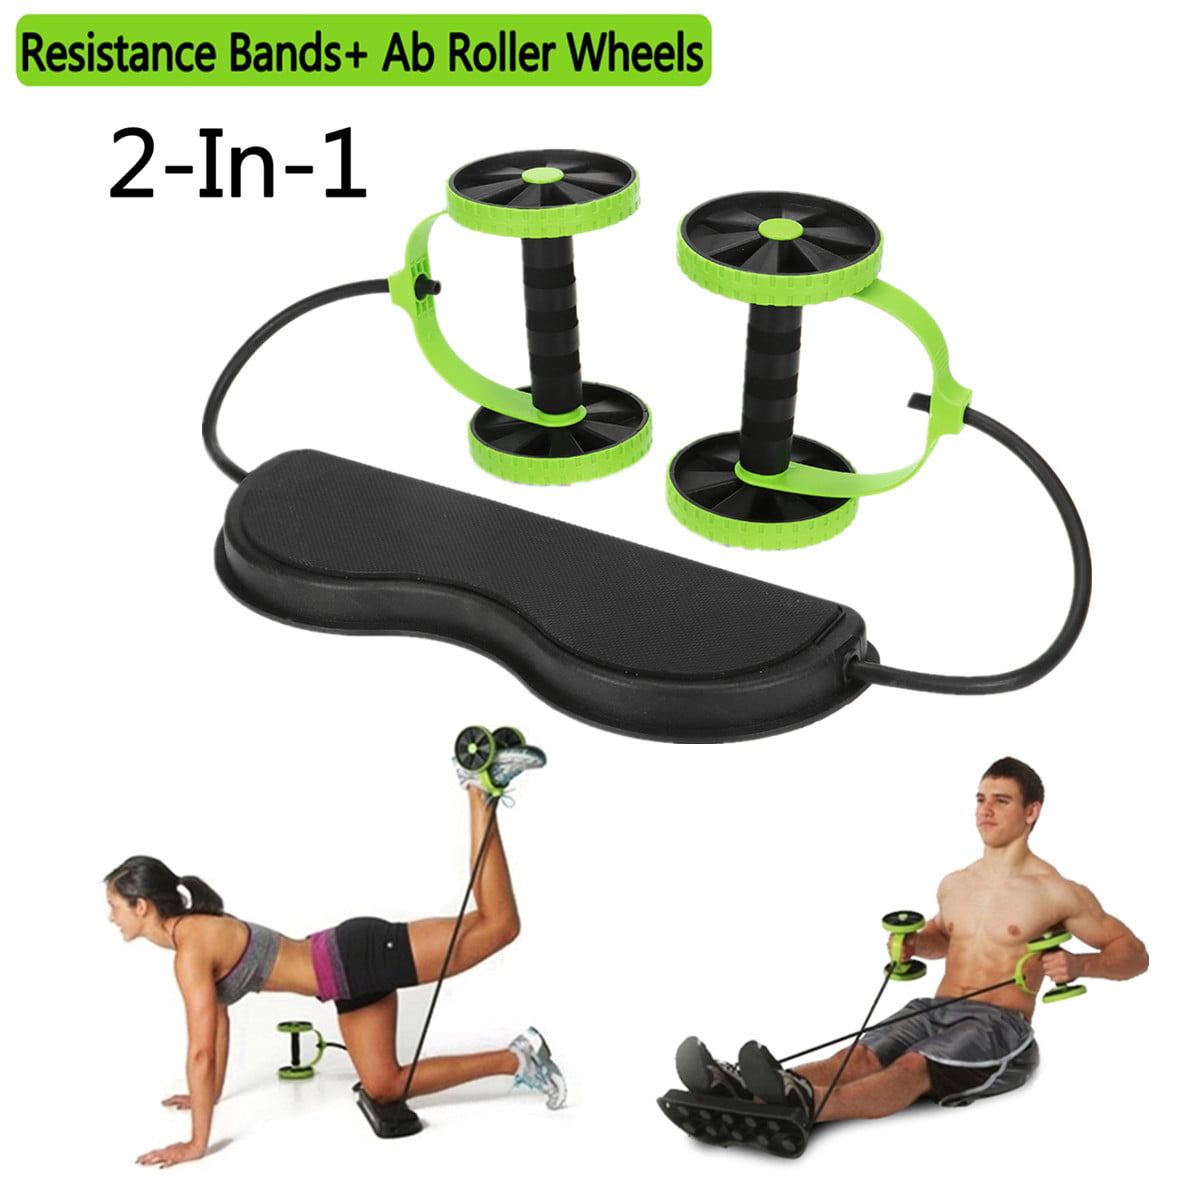 y Ganzkörpertraining Fitness Adoture Multifuncional de Doble AB-Rollenrad-Heim-Fitnessgeräte Power-Roll-AB-Trainer-Core-Ruedas fortalece los músculos Bauchmuskelübungen para Bauch